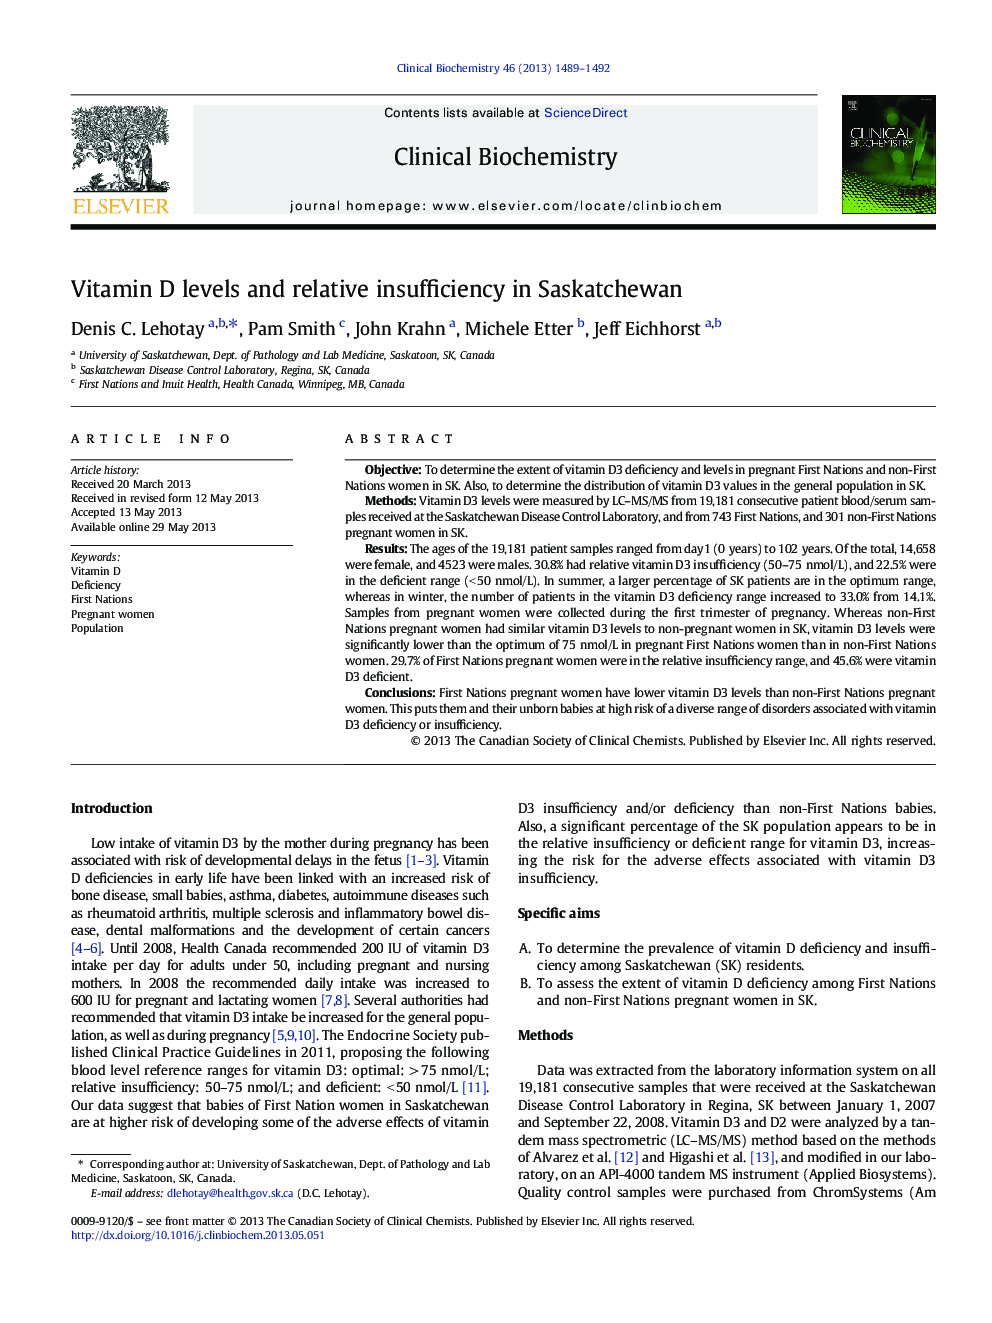 Vitamin D levels and relative insufficiency in Saskatchewan